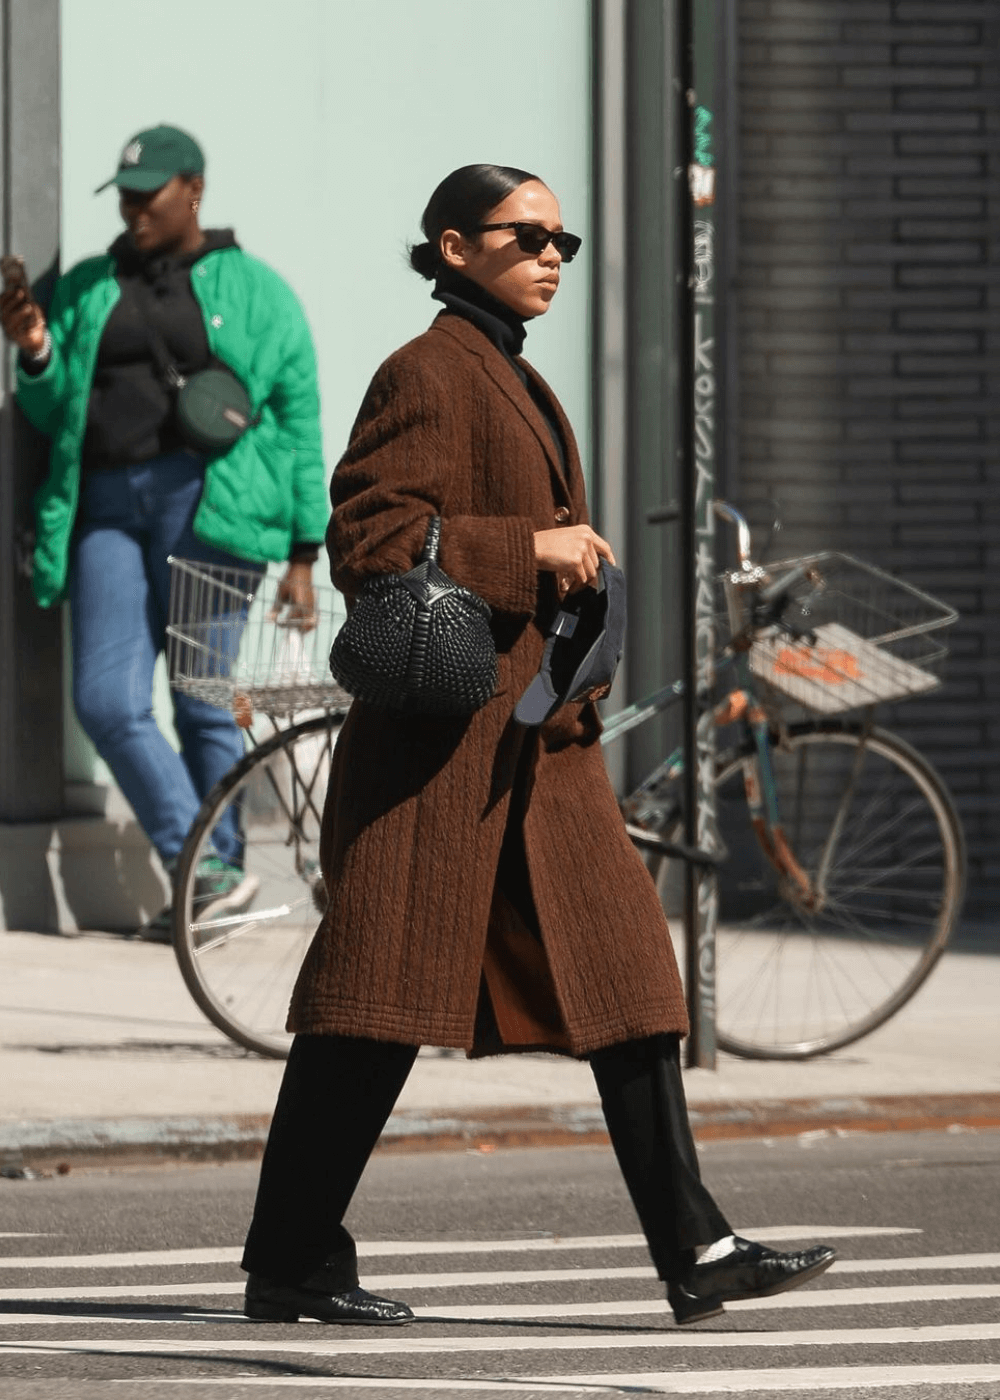 Taylor Russell - calça jeans, tricot marrom, sapato preto e óculos - Taylor Russell - outono - mulher de óculos andando na rua - https://stealthelook.com.br